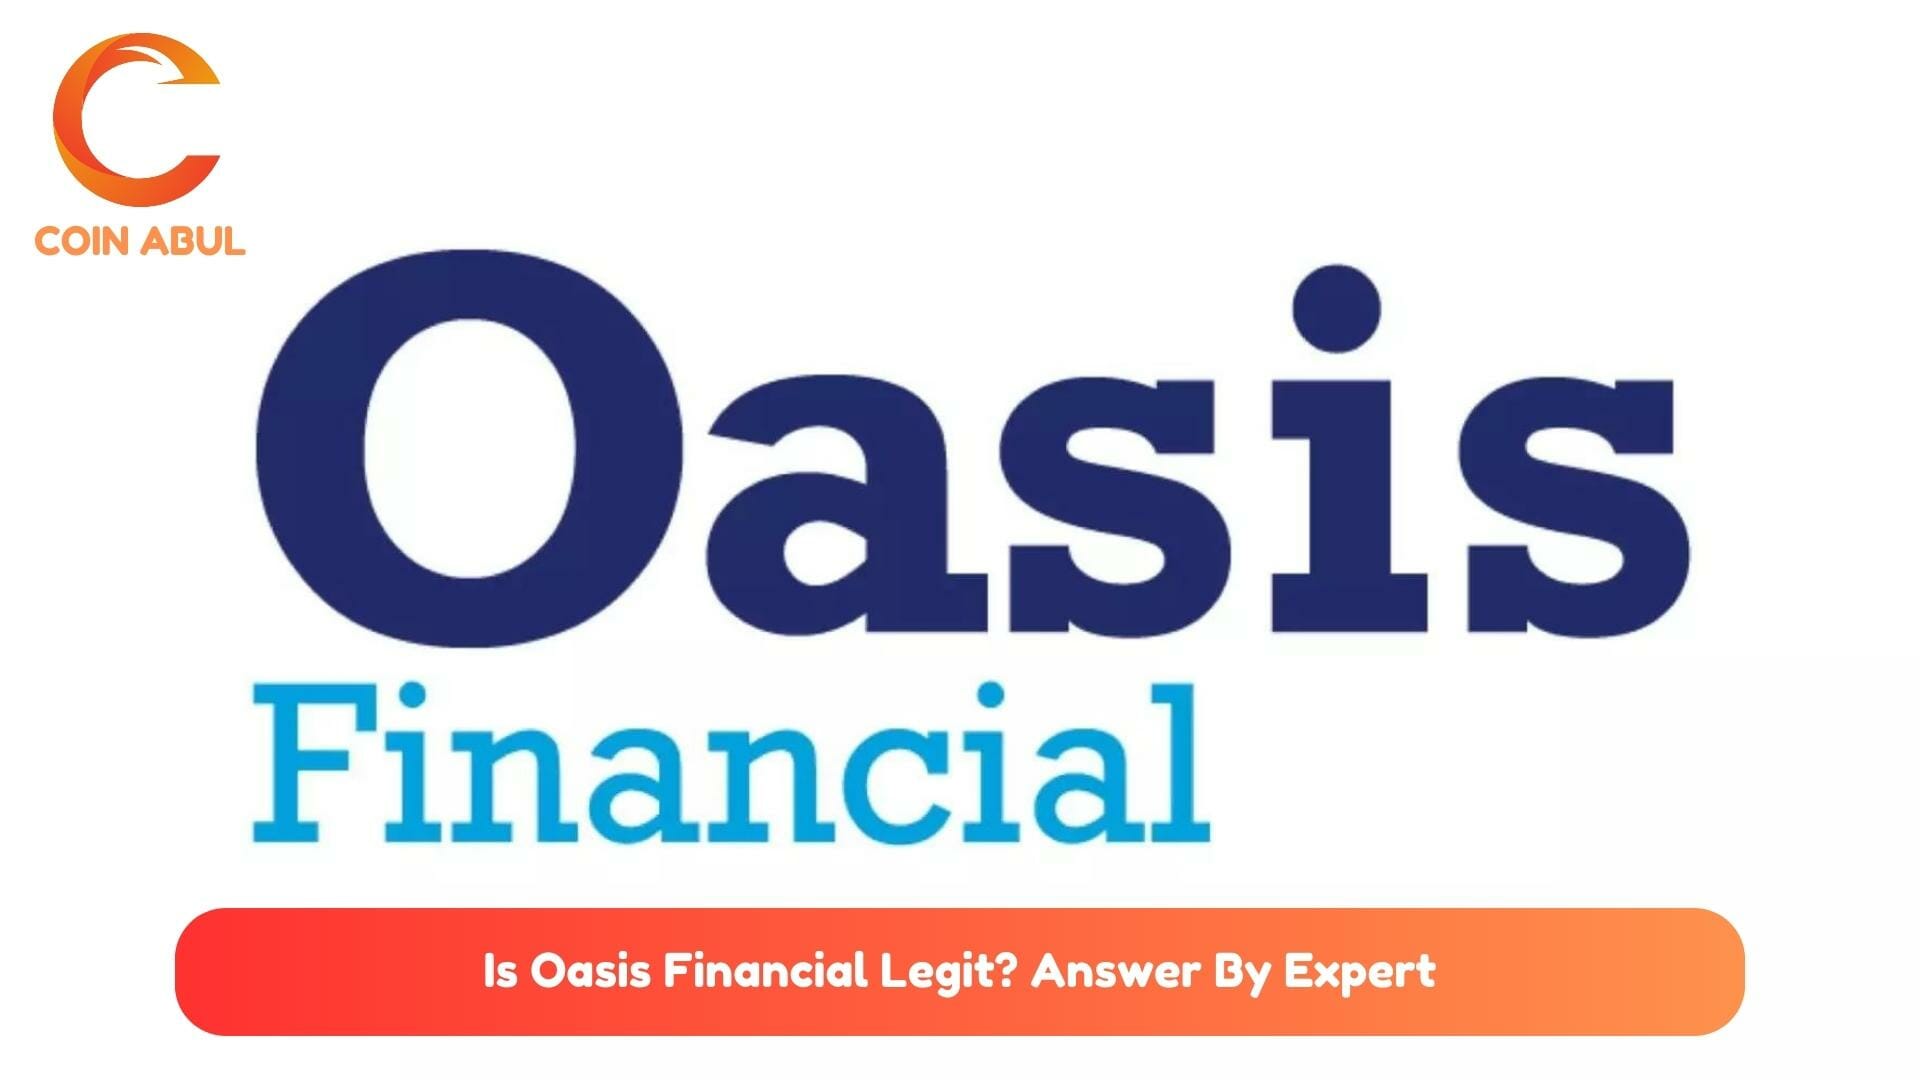 Is Oasis Financial Legit